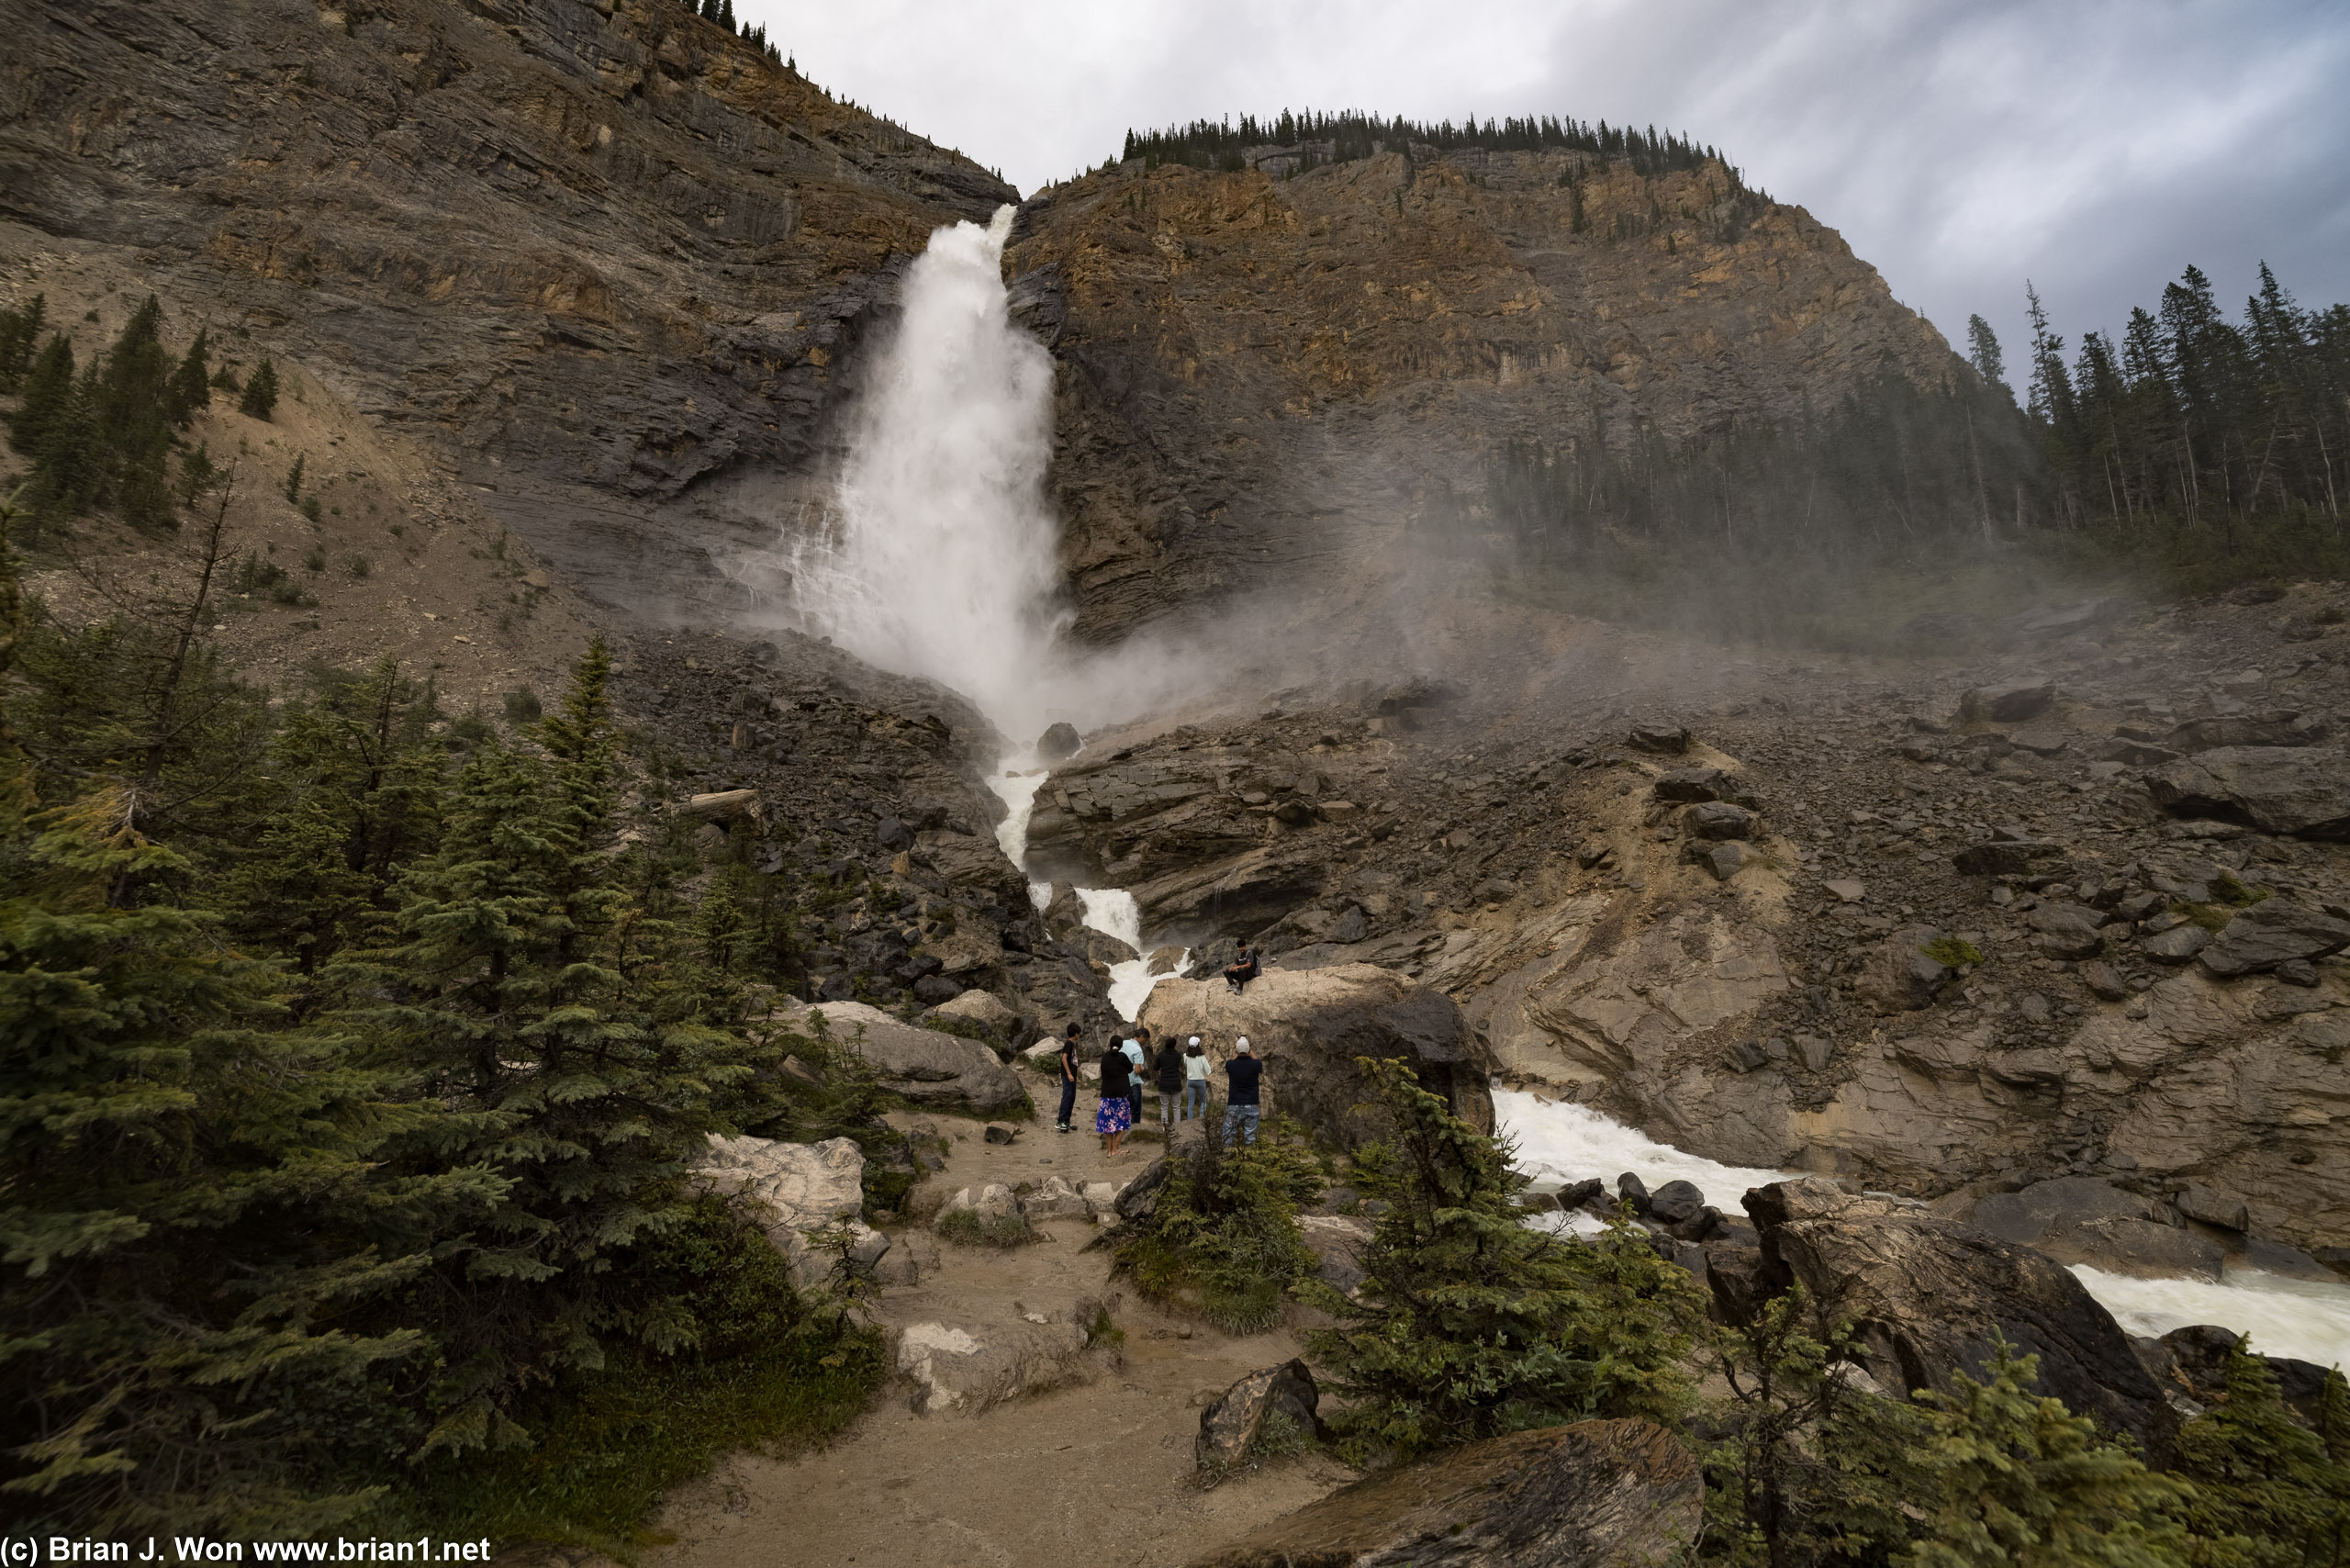 Takakkaw Falls, all 373 meters (1,224 feet) of them. :-o